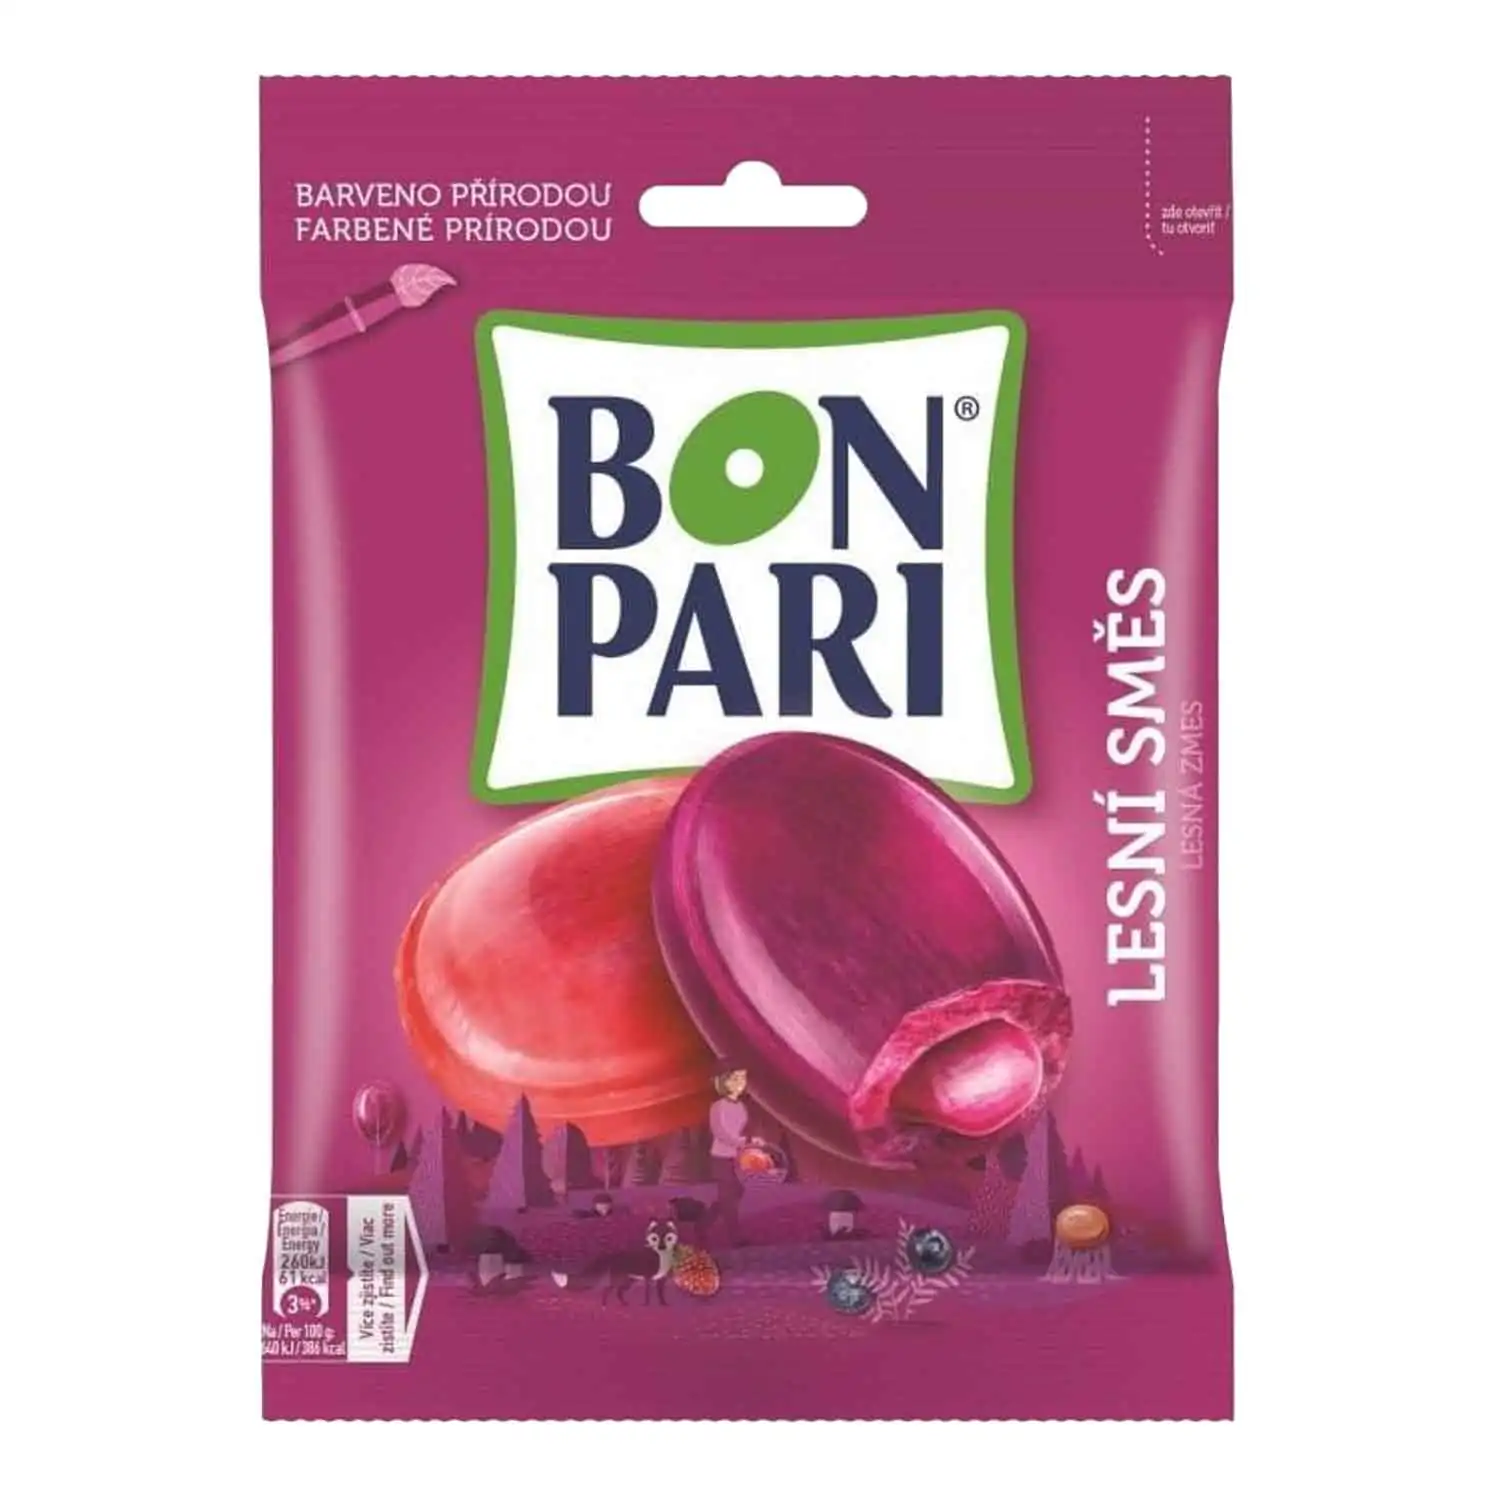 Bon Pari fruit des bois 90g - Buy at Real Tobacco